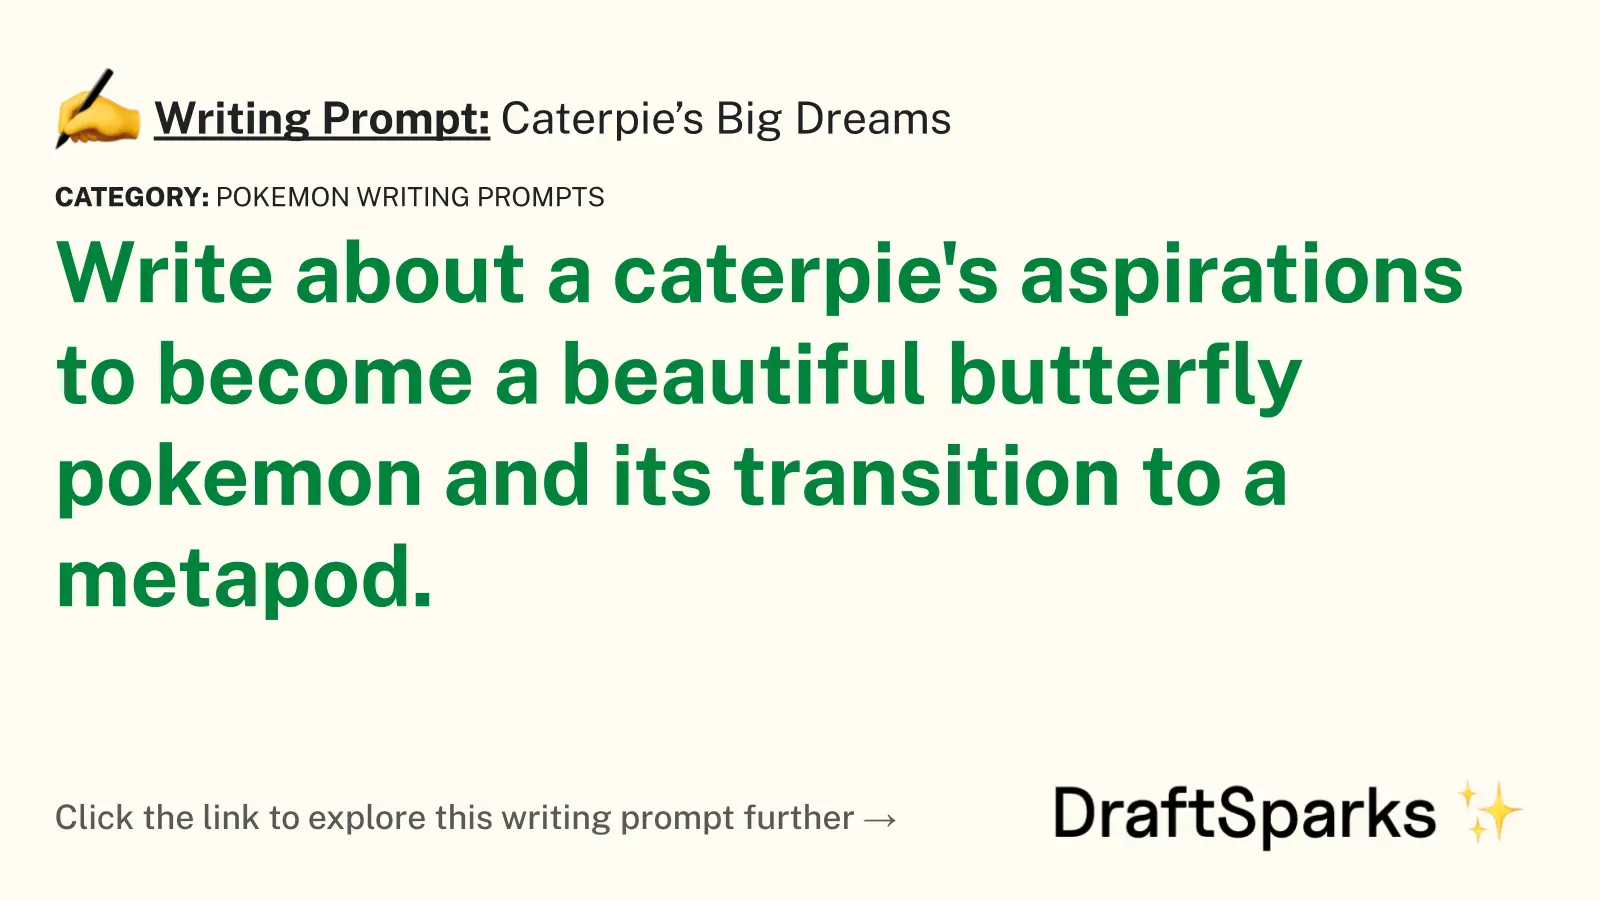 Caterpie’s Big Dreams